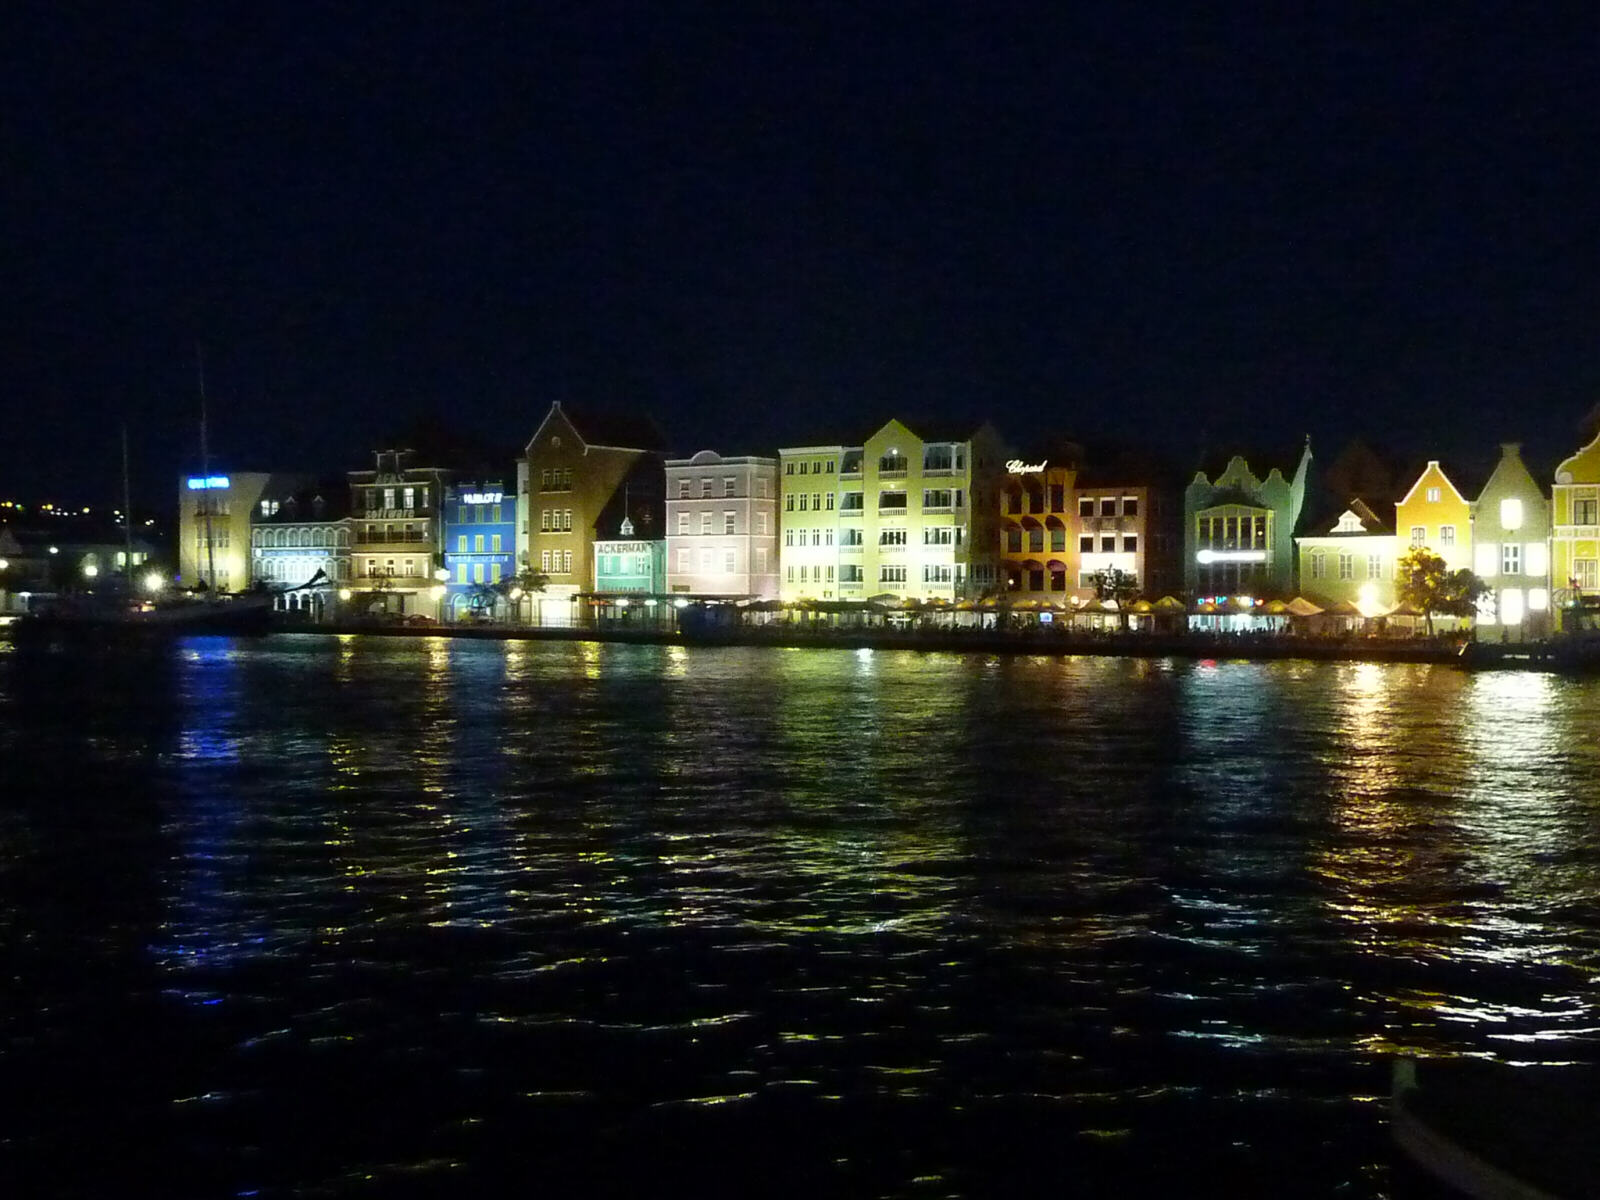 Nighttime at Handelskade, Willemstad, Curacao